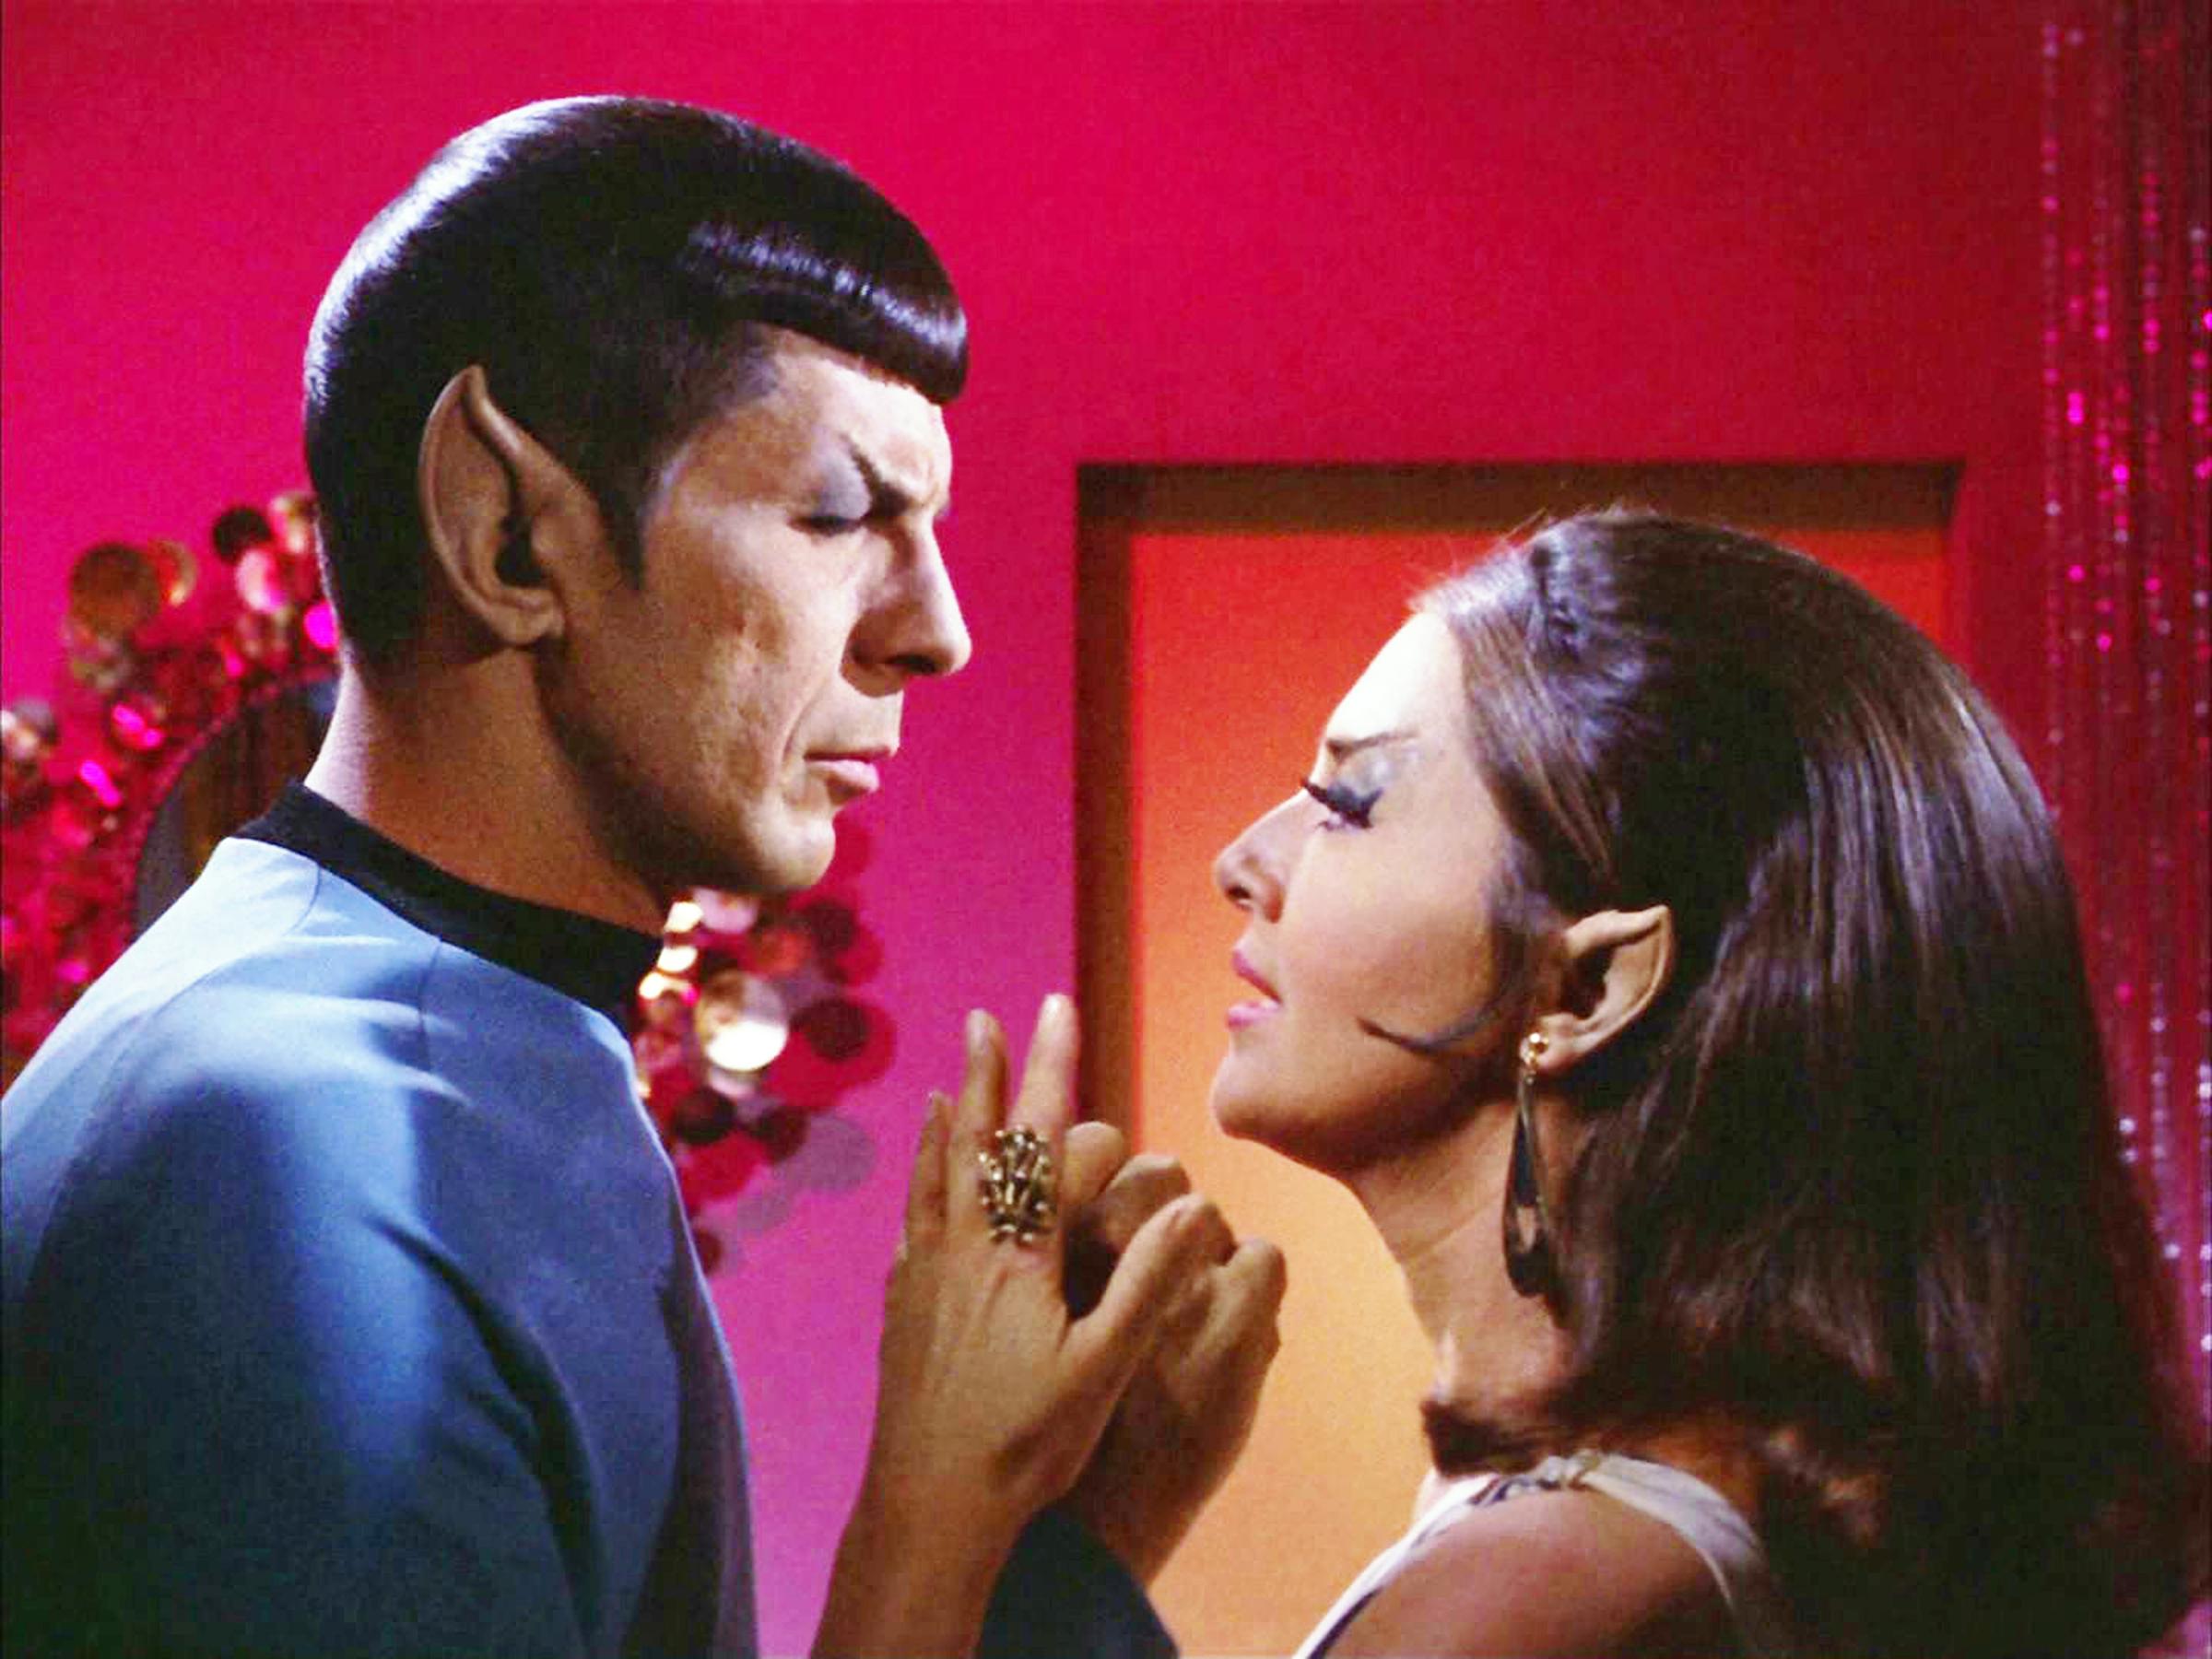 Leonard Nimoy as Mr. Spock and Joanne Linville as Romulan Commander in the Star Trek: The Original Series, Sept. 27, 1968.